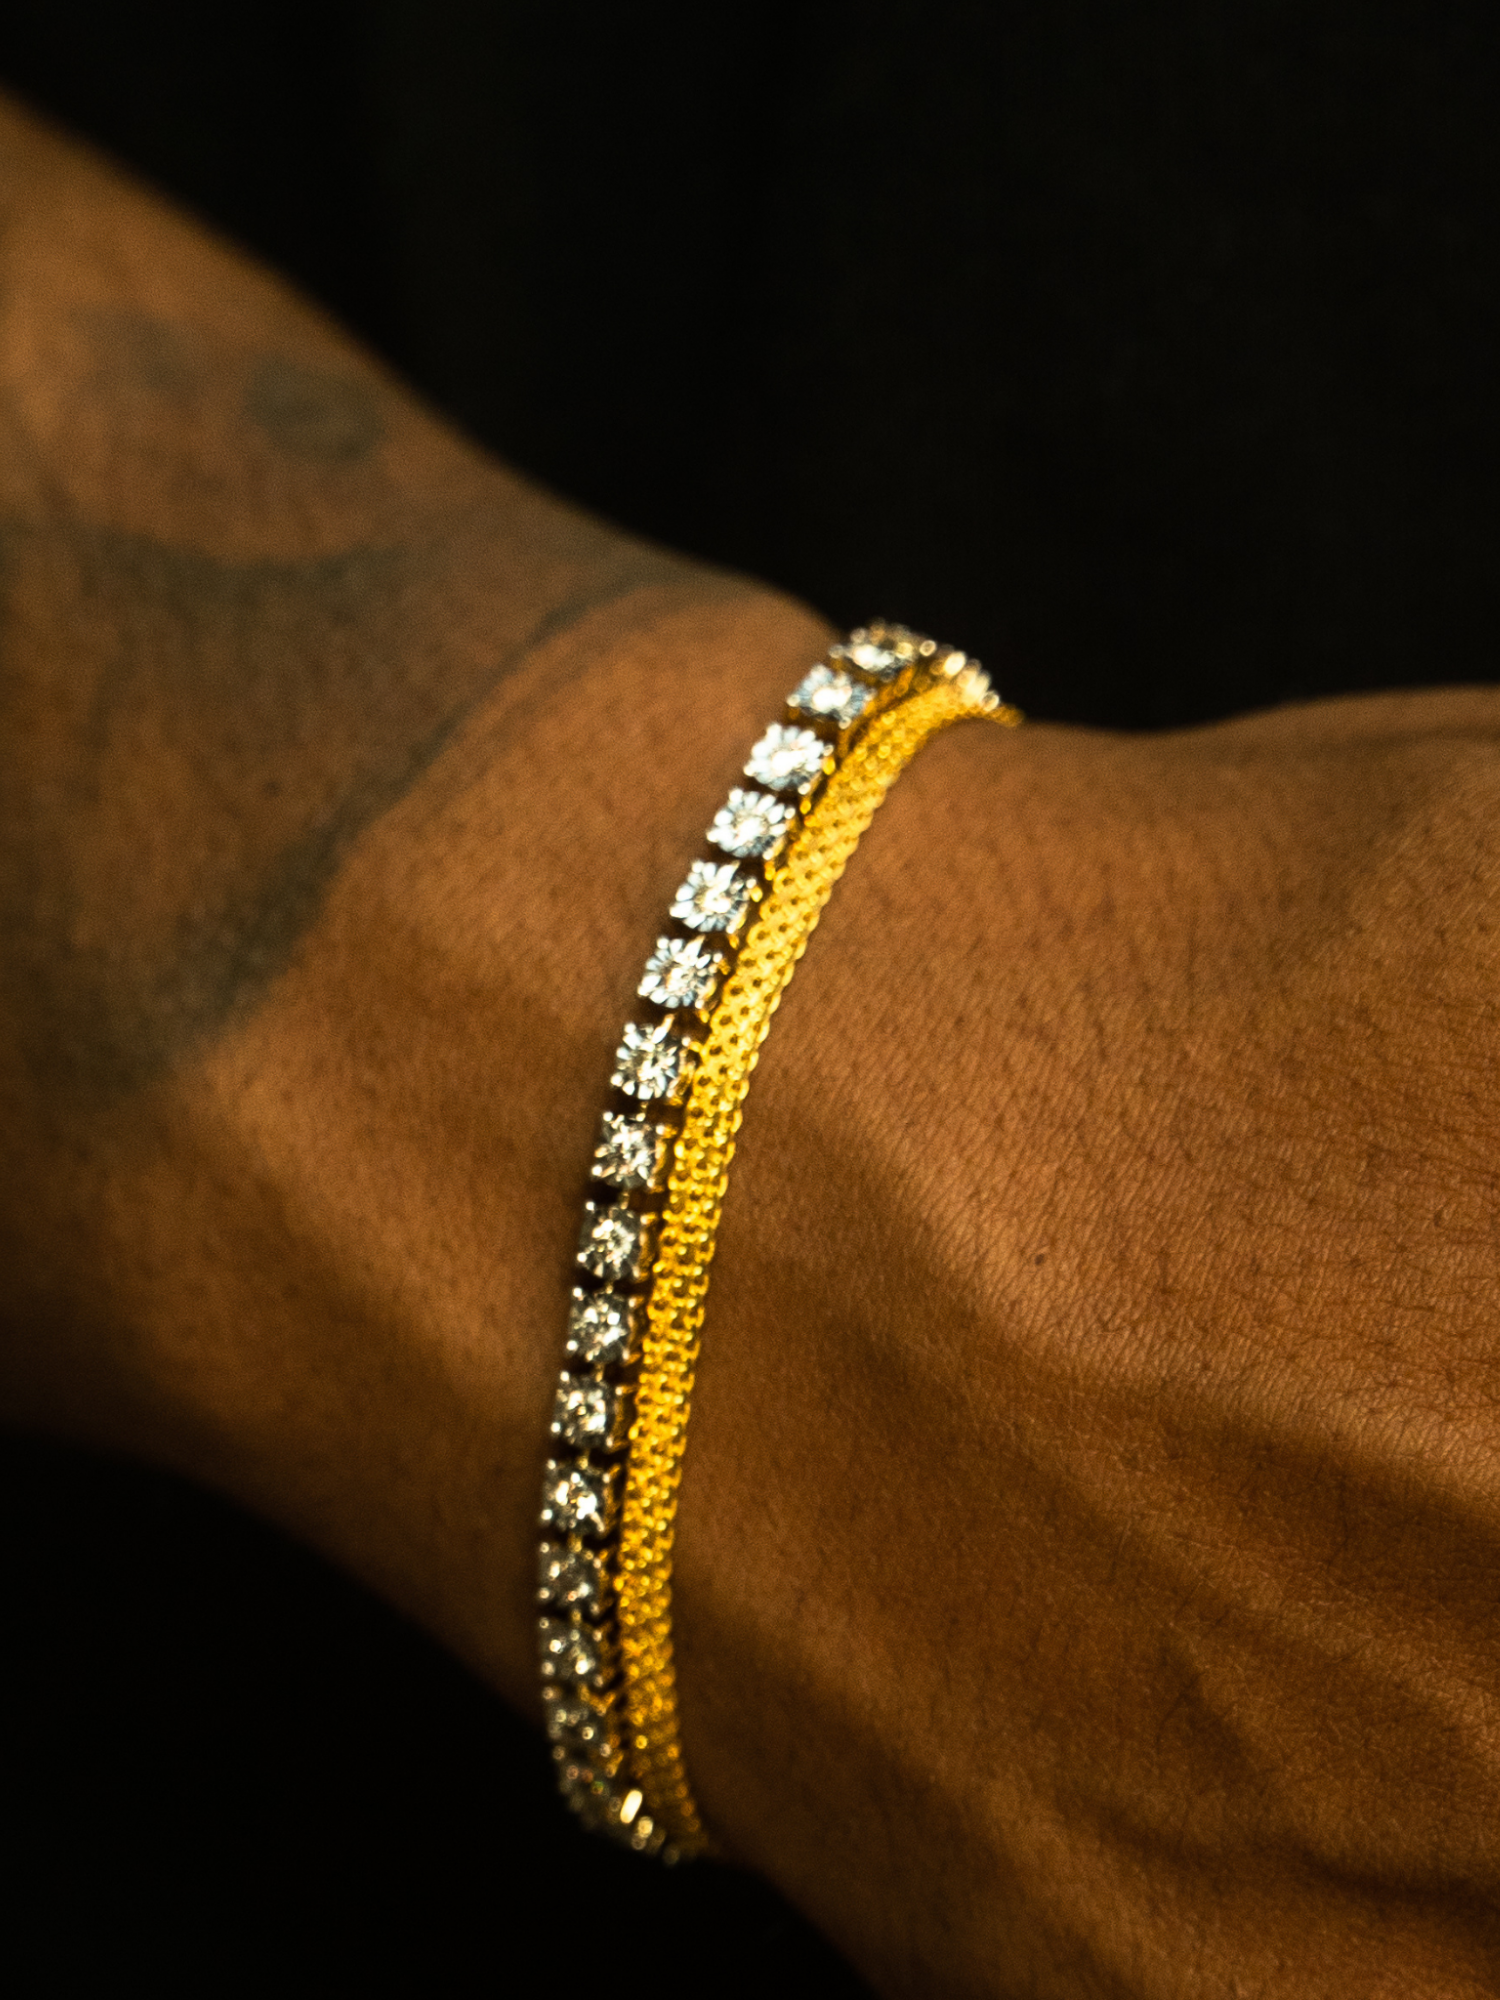 18Kt gold men's bracelet|Huge gold bracelet - YouTube